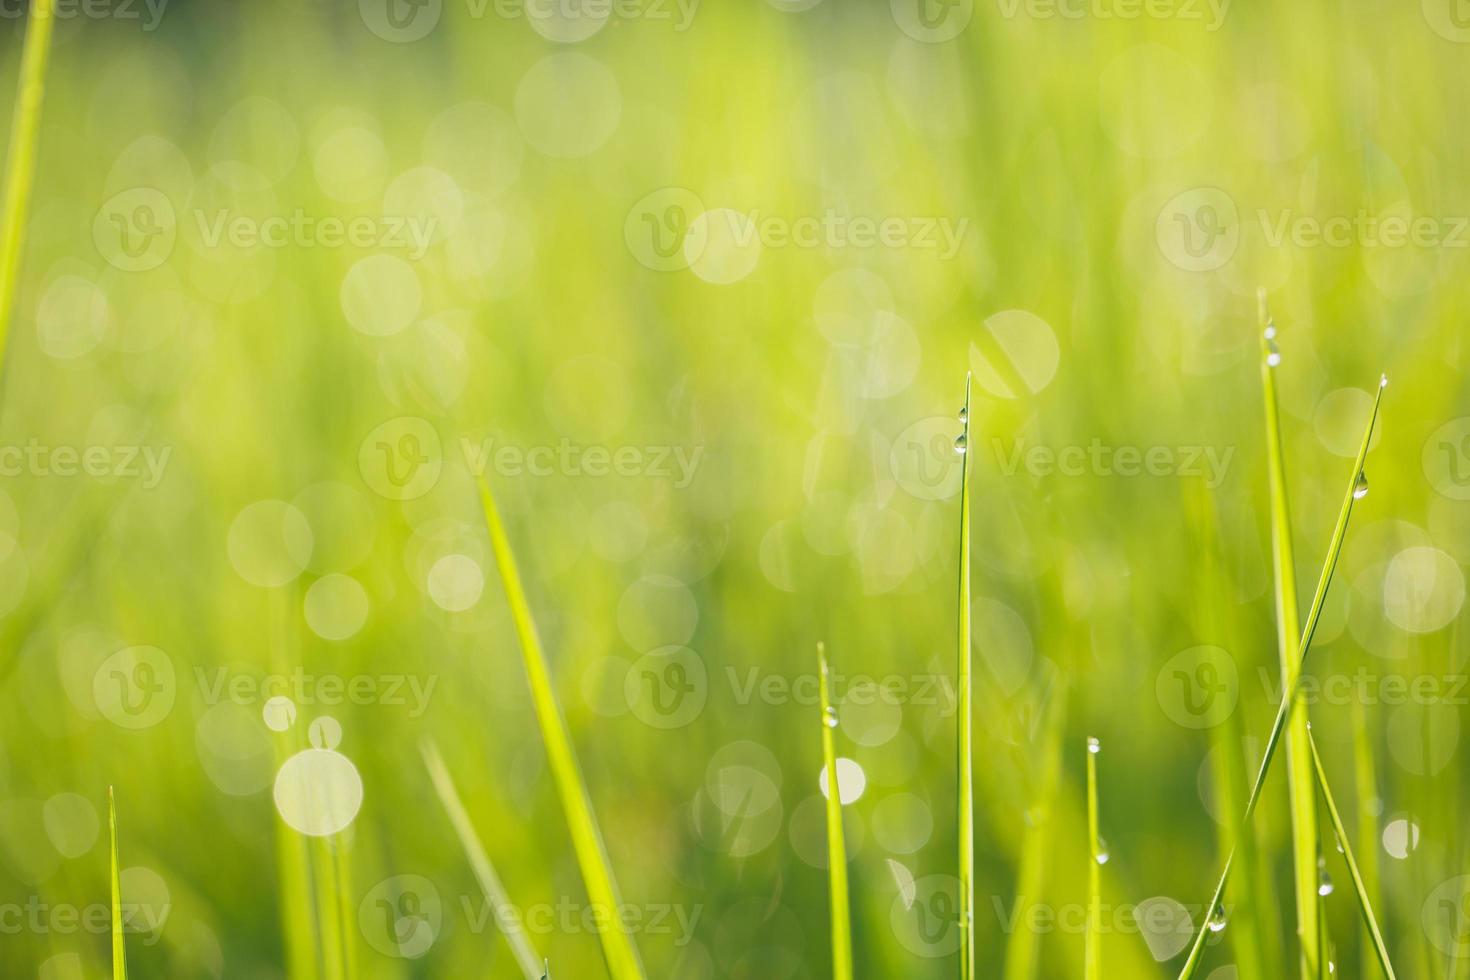 Dew on grass greenery background photo